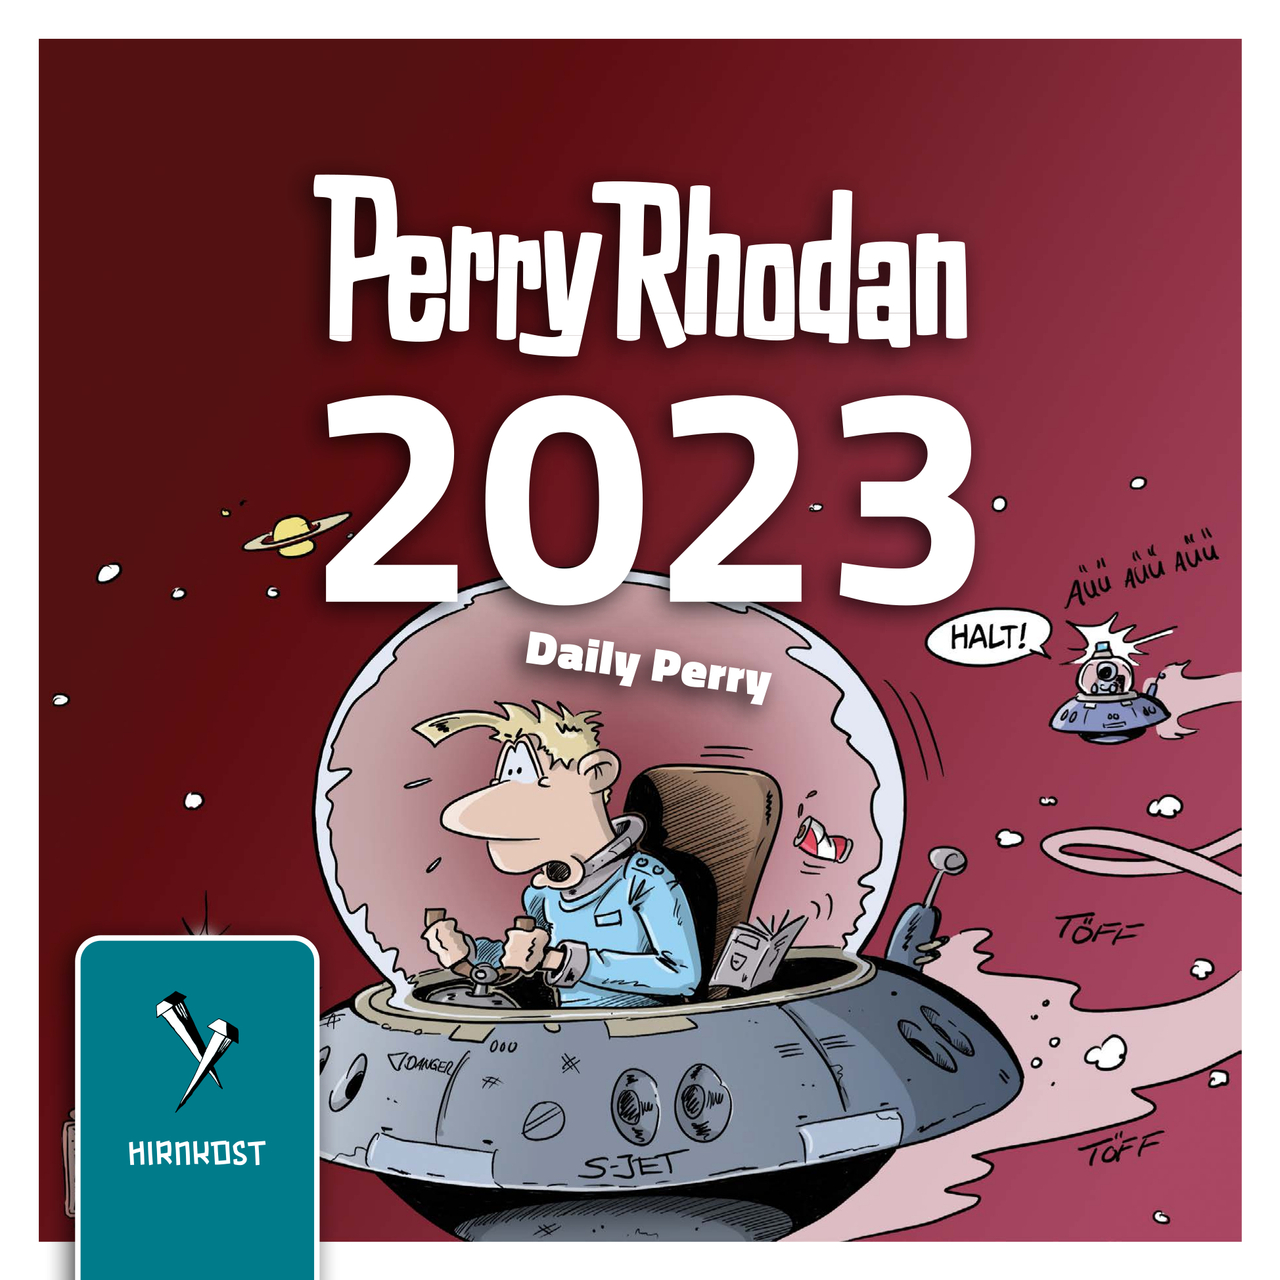 Perry Rhodan Posterkalender 2022 